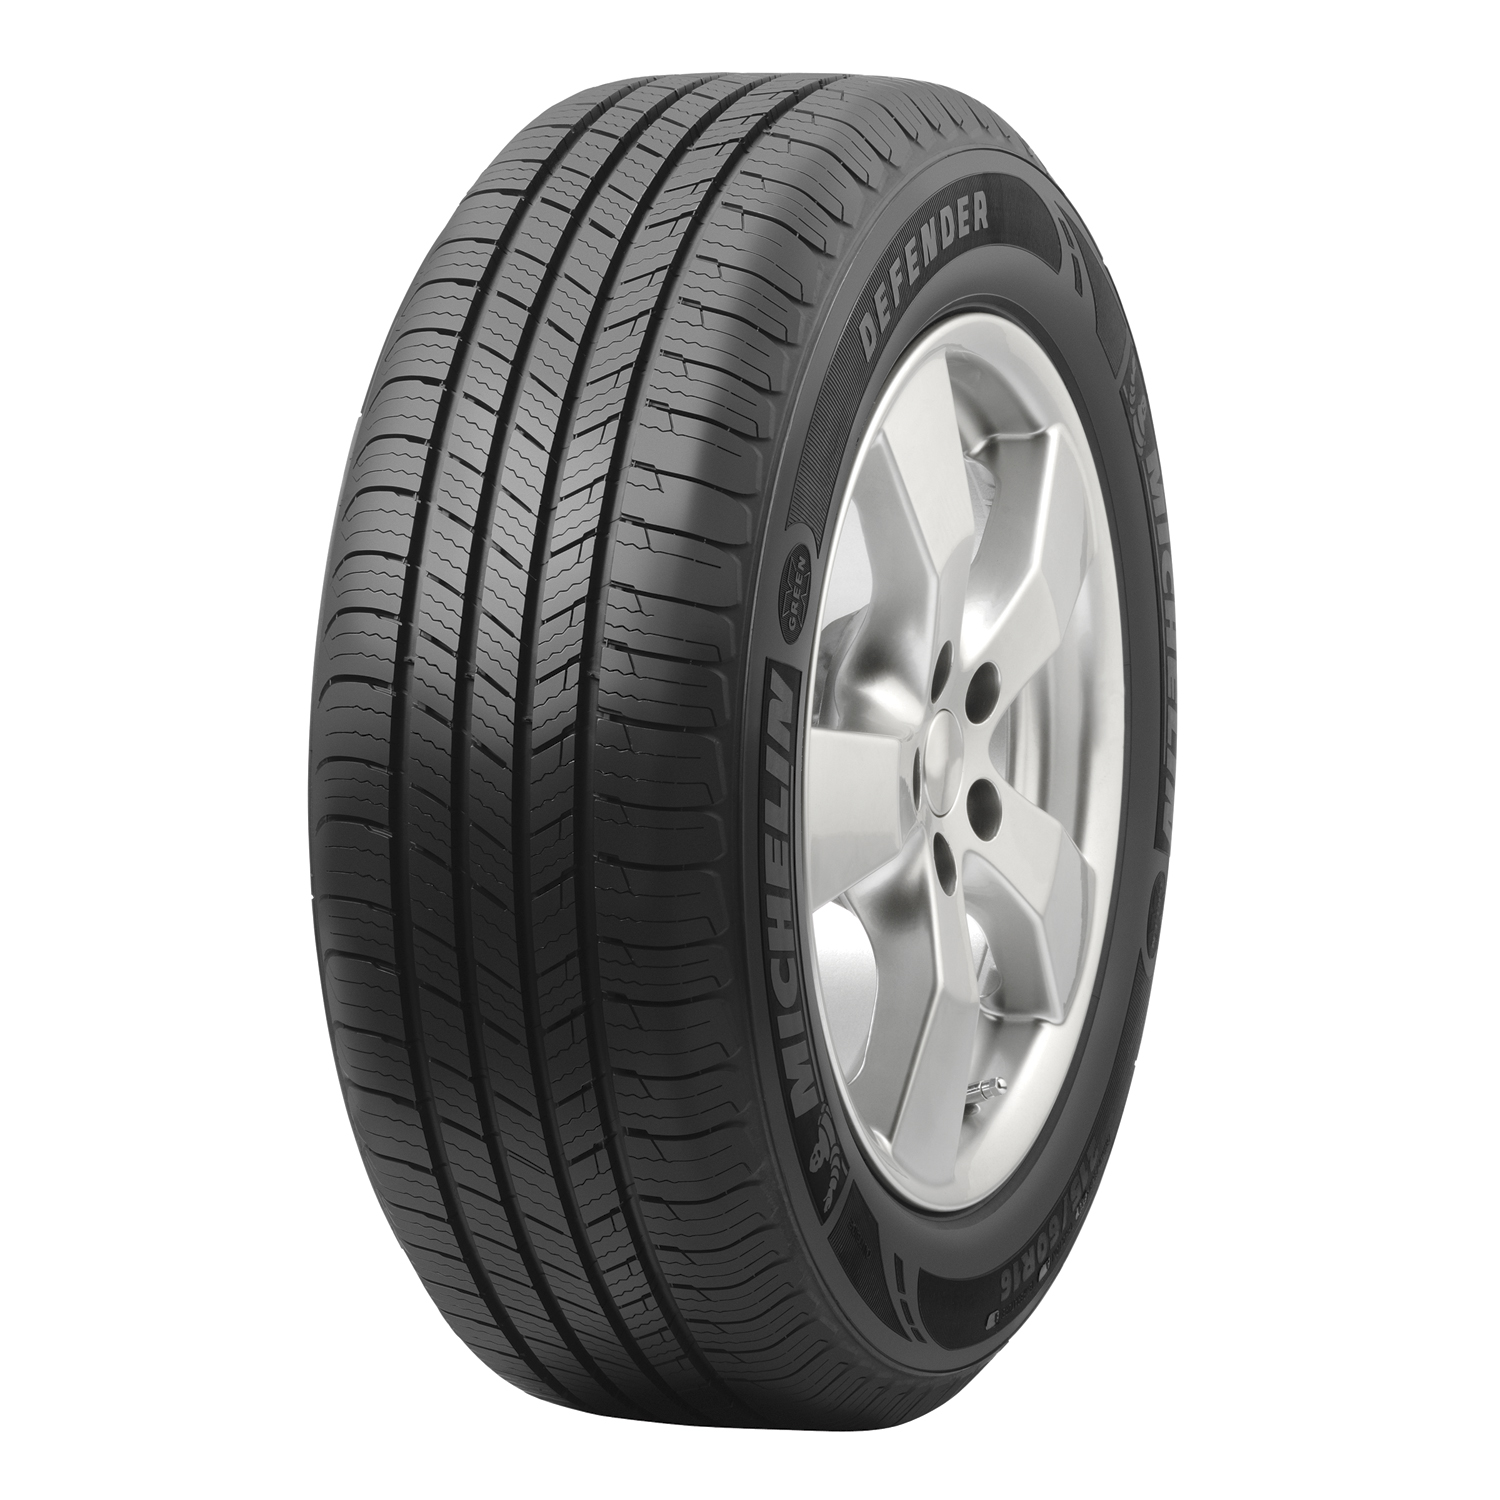 Michelin Defender - 205/55R16 91H - All Season Tire | Shop Your Way ...